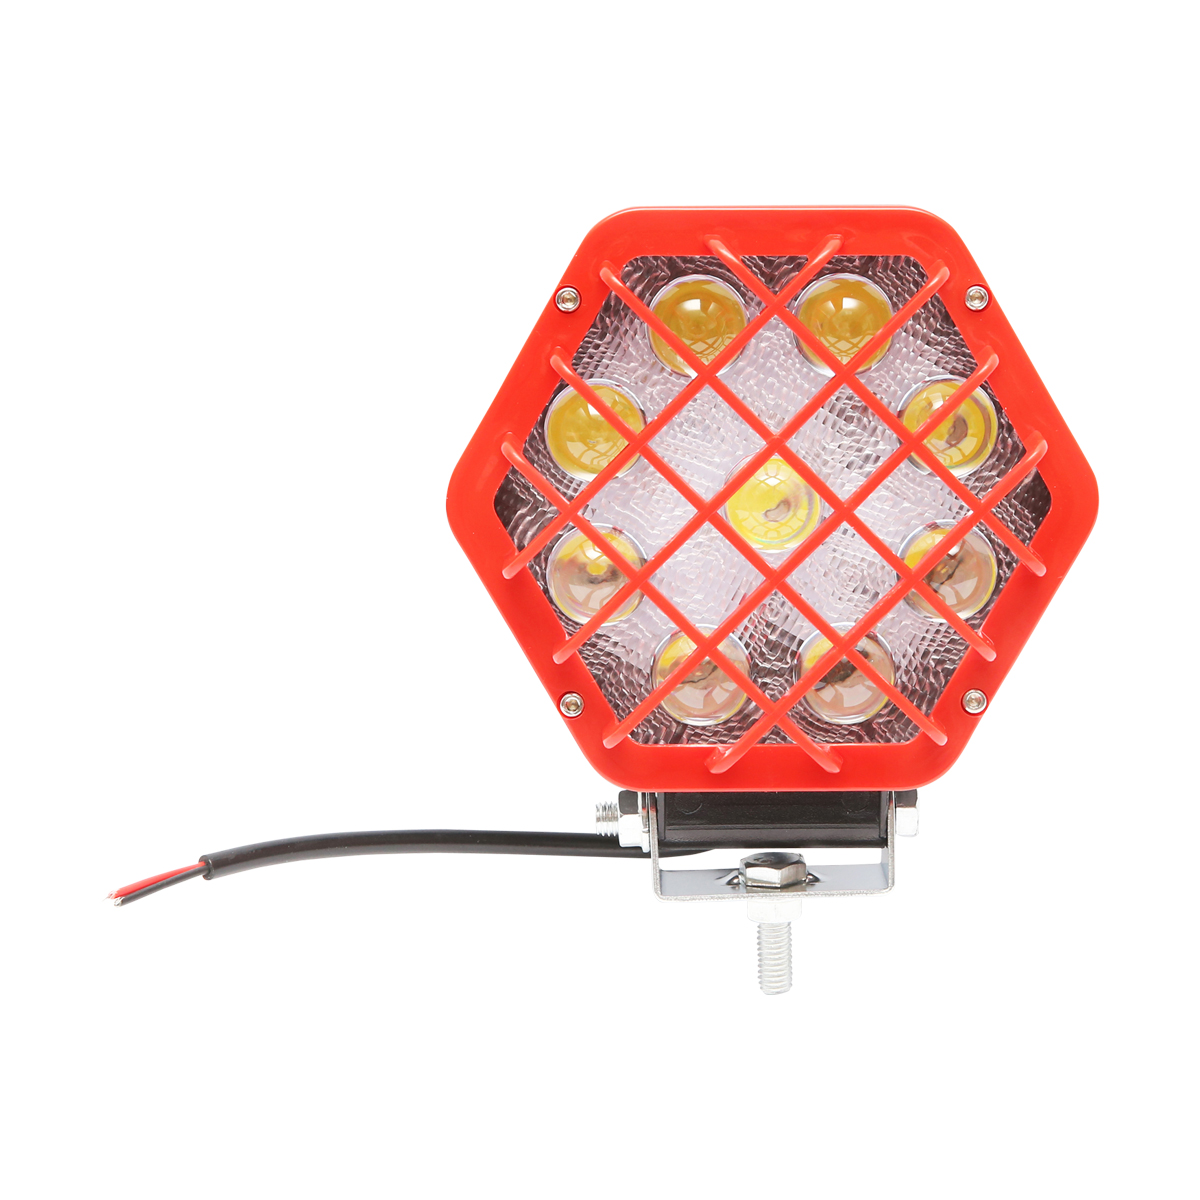 Lampa proiector hexagonal cu grilaj plastic rosu, 9 LED-uri, unghi de radiere 30, DC 10-80V 27W Breckner Germany